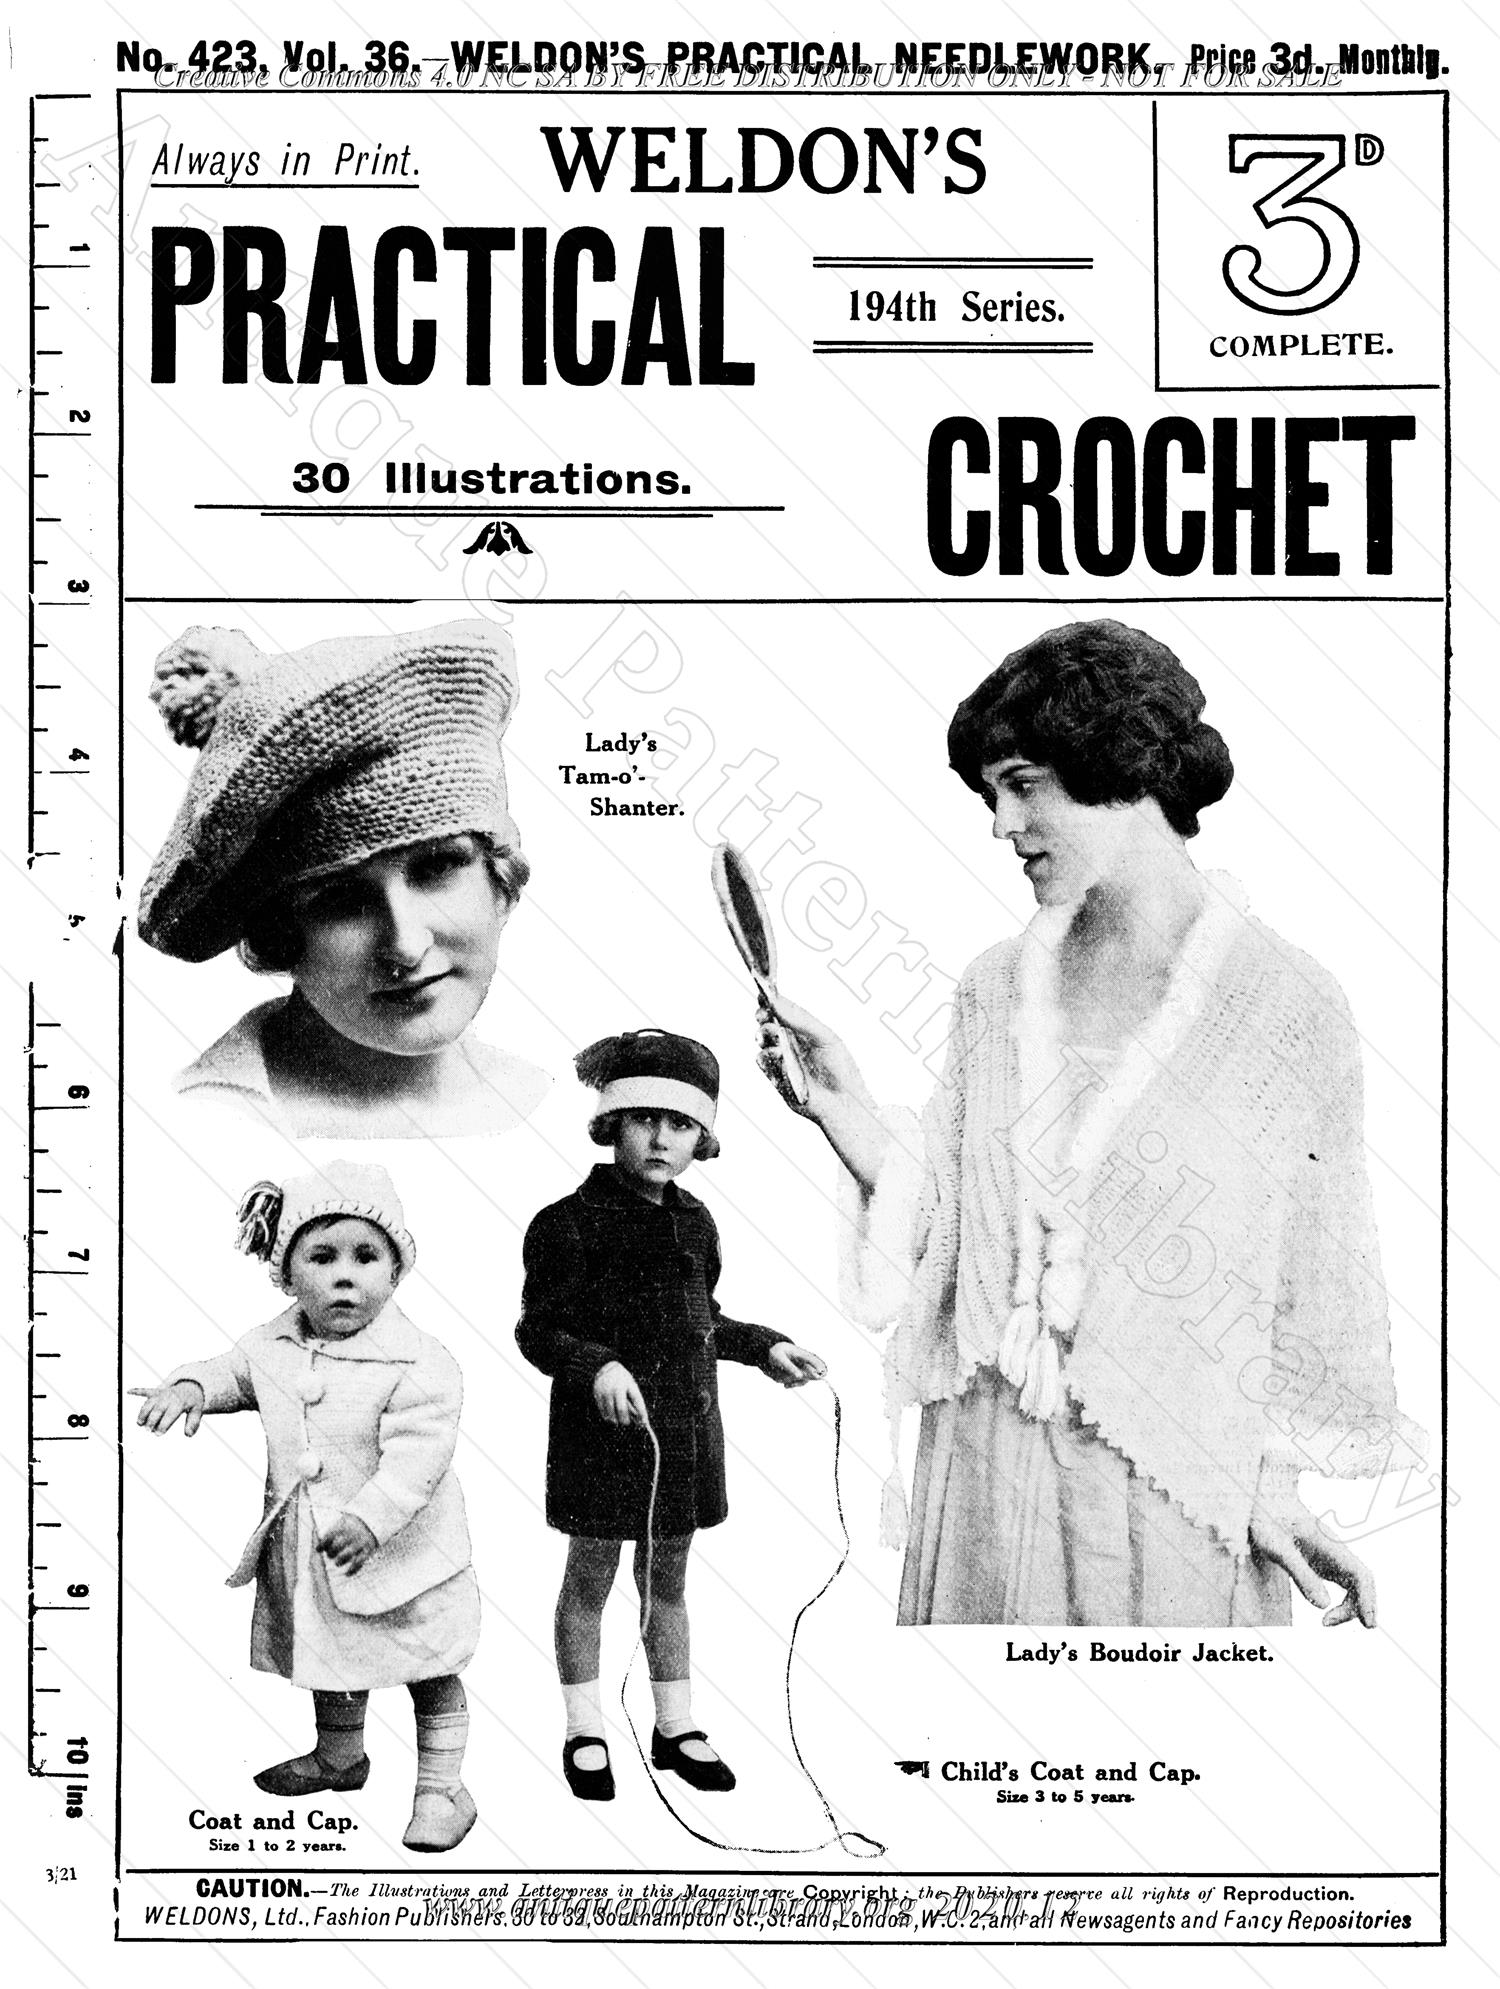 K-WK015 Weldon's Practical Crochet, 194th Series